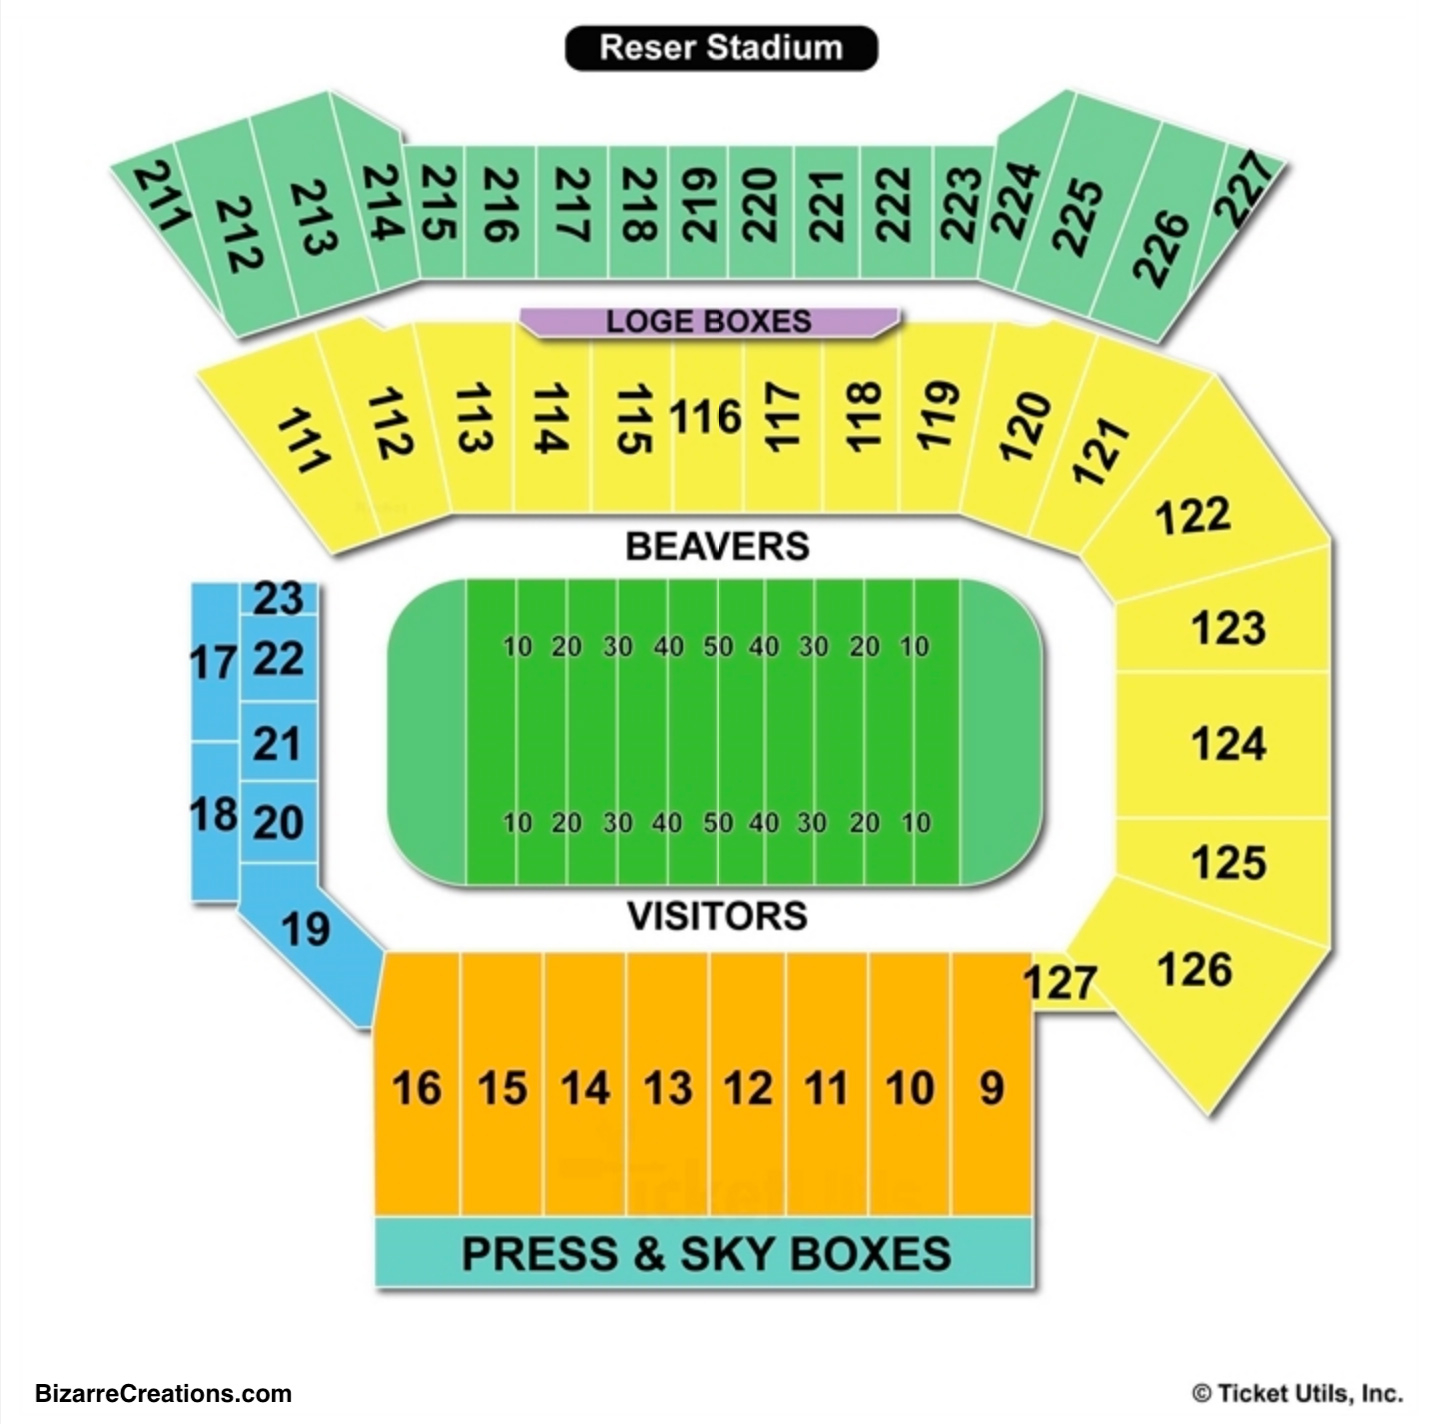 Reser Stadium Seating Charts Views Games Answers Cheats